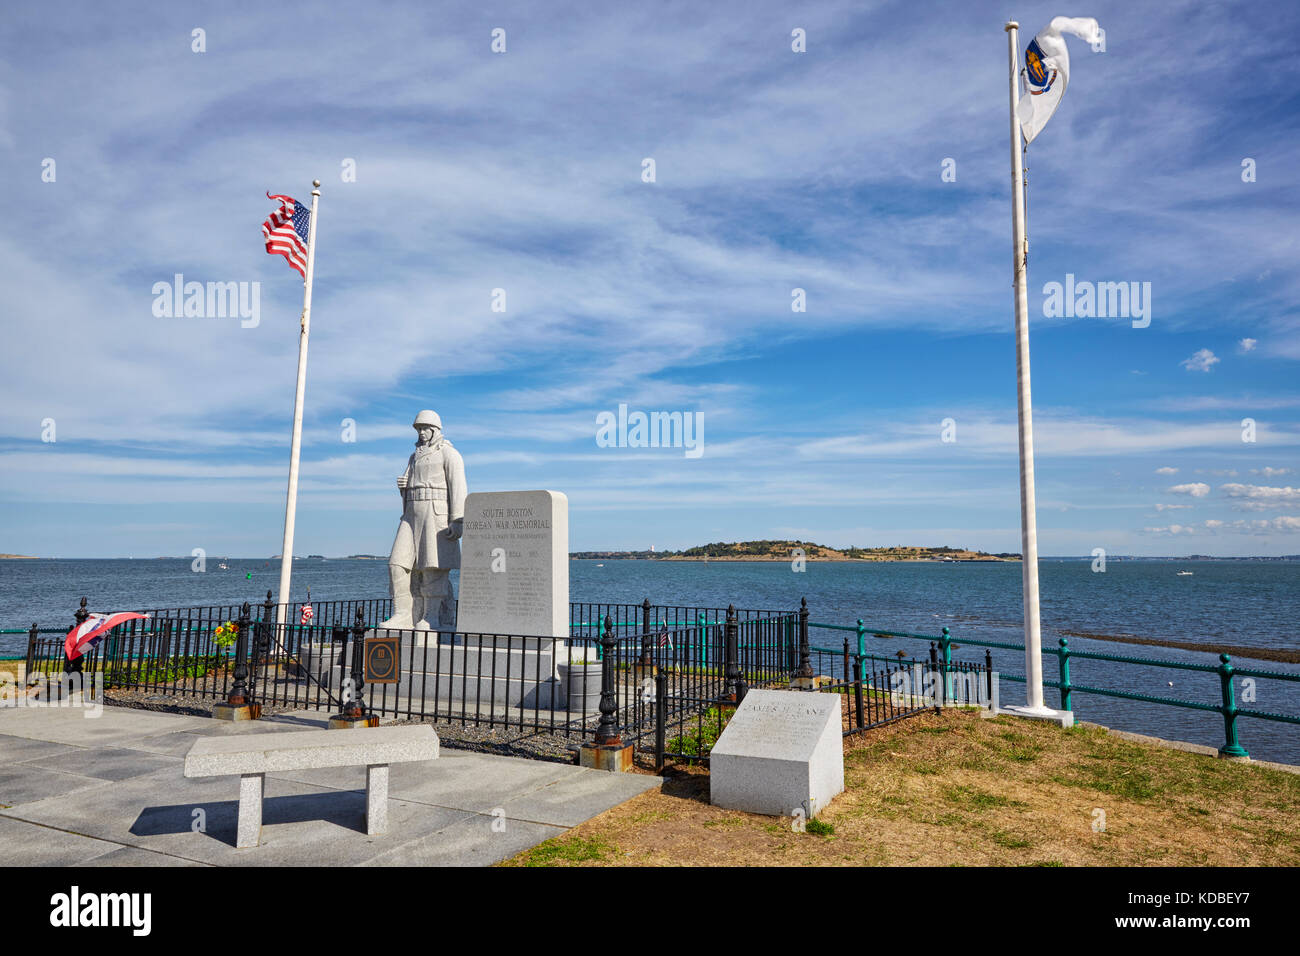 South Boston Korean War Memorial, Castle Island, South Boston, Massachusetts, USA Stockfoto